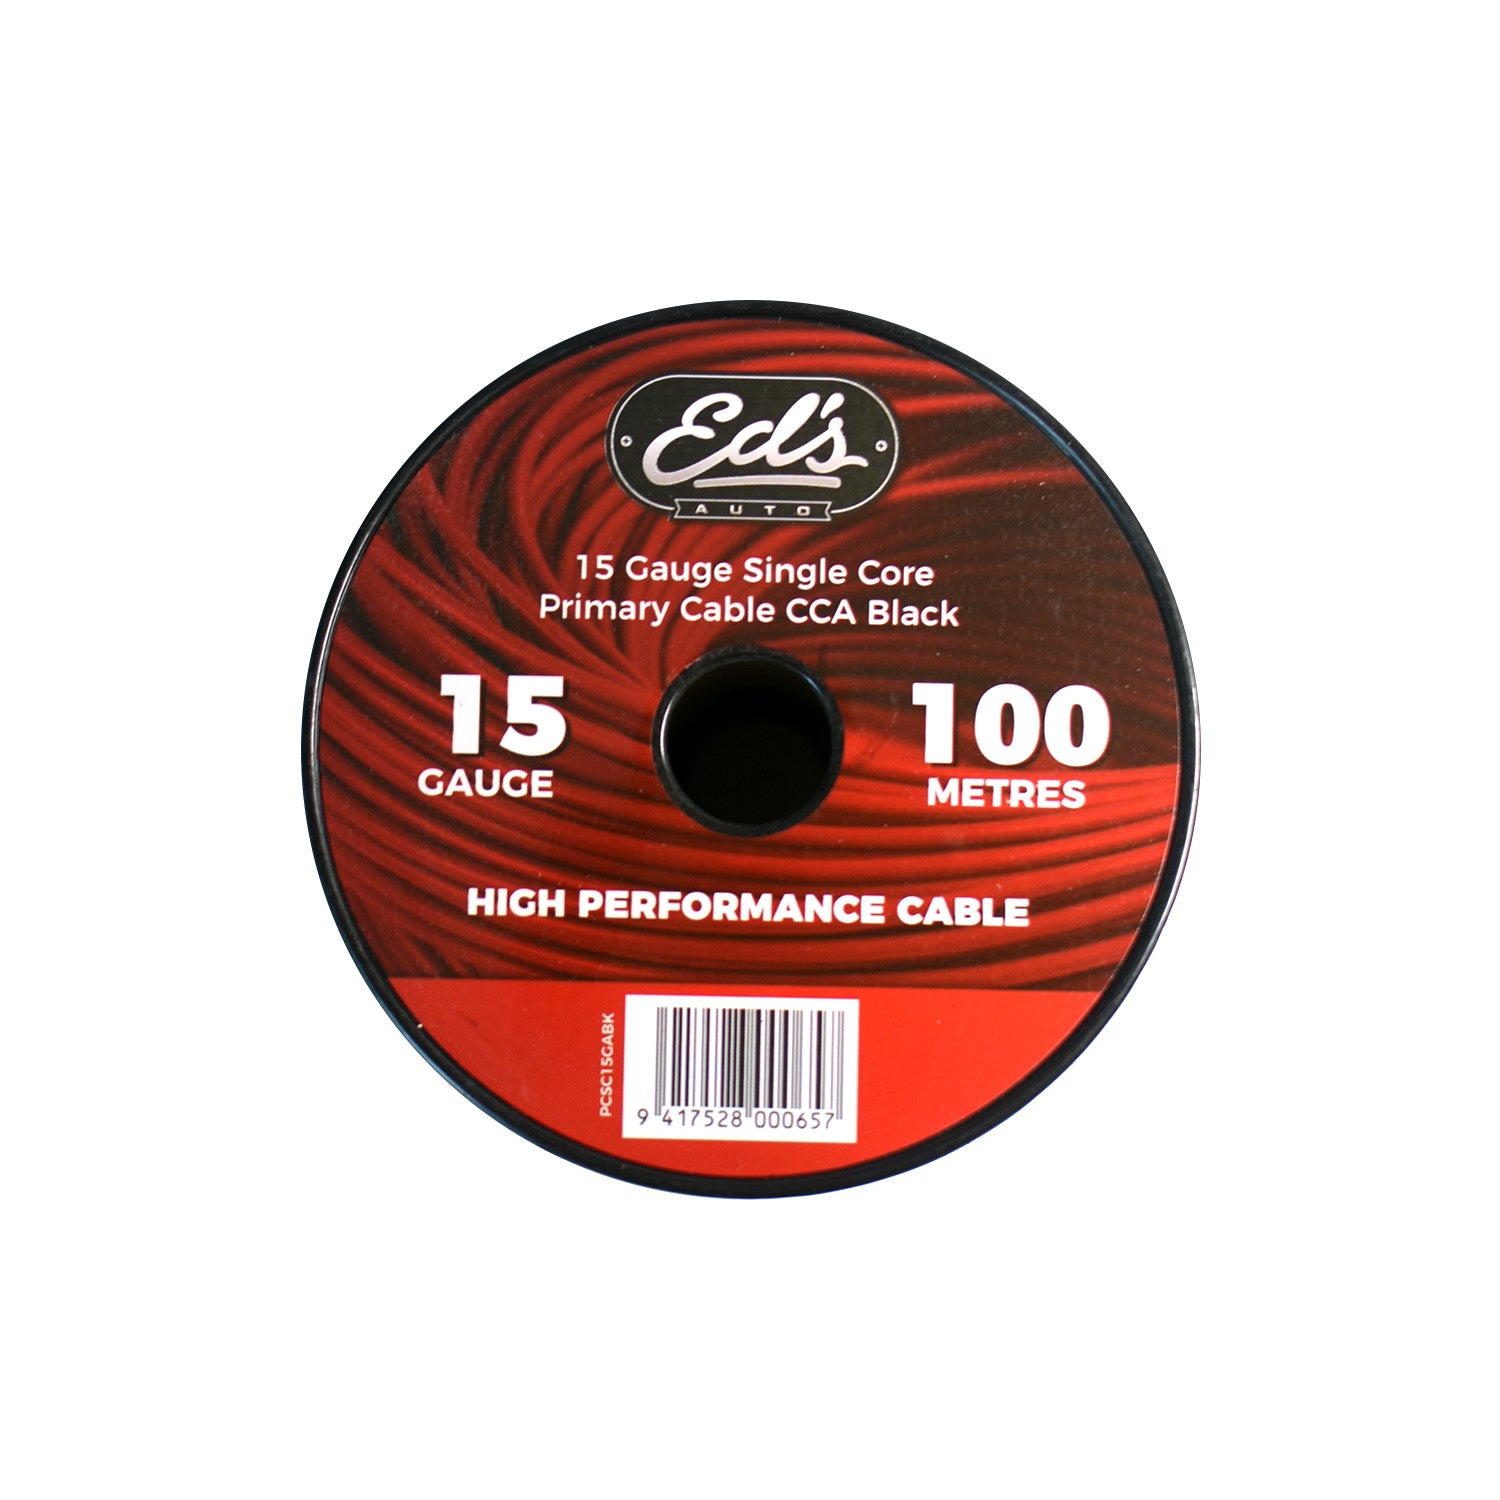 Eds 15 Gauge Single Core Primary Cable Cca 100M Black